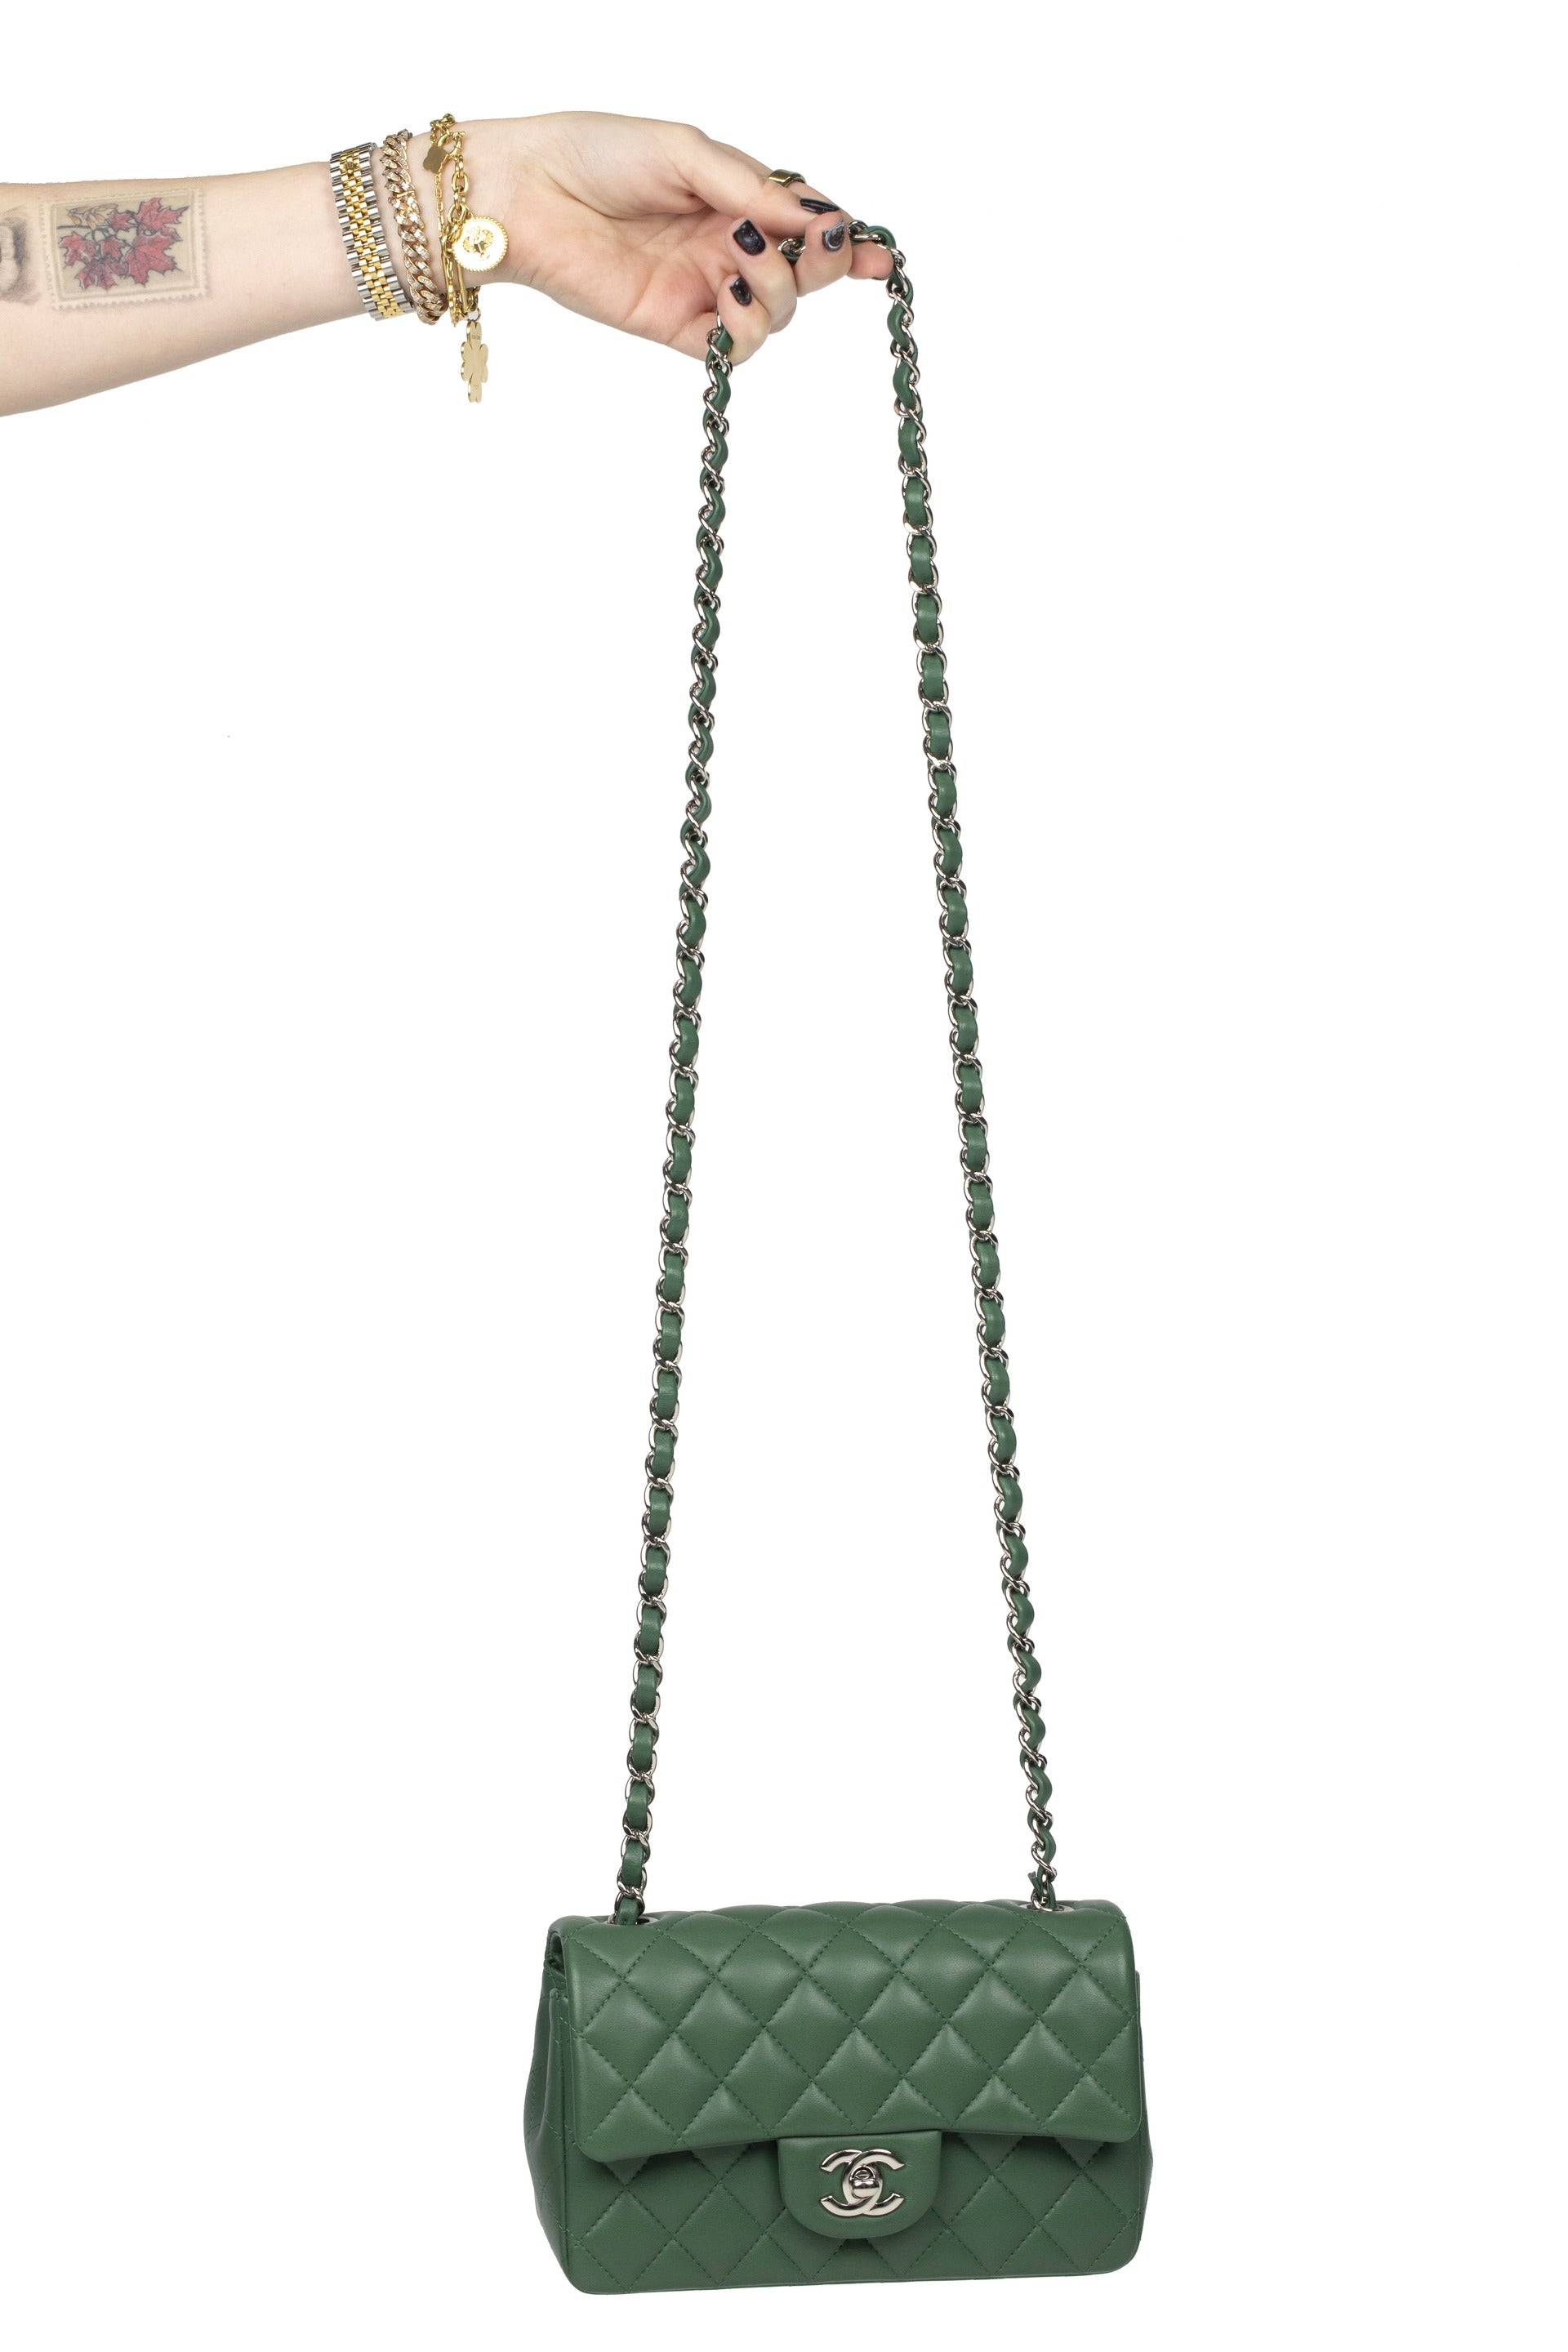 Chanel Green Mini Flap Bag